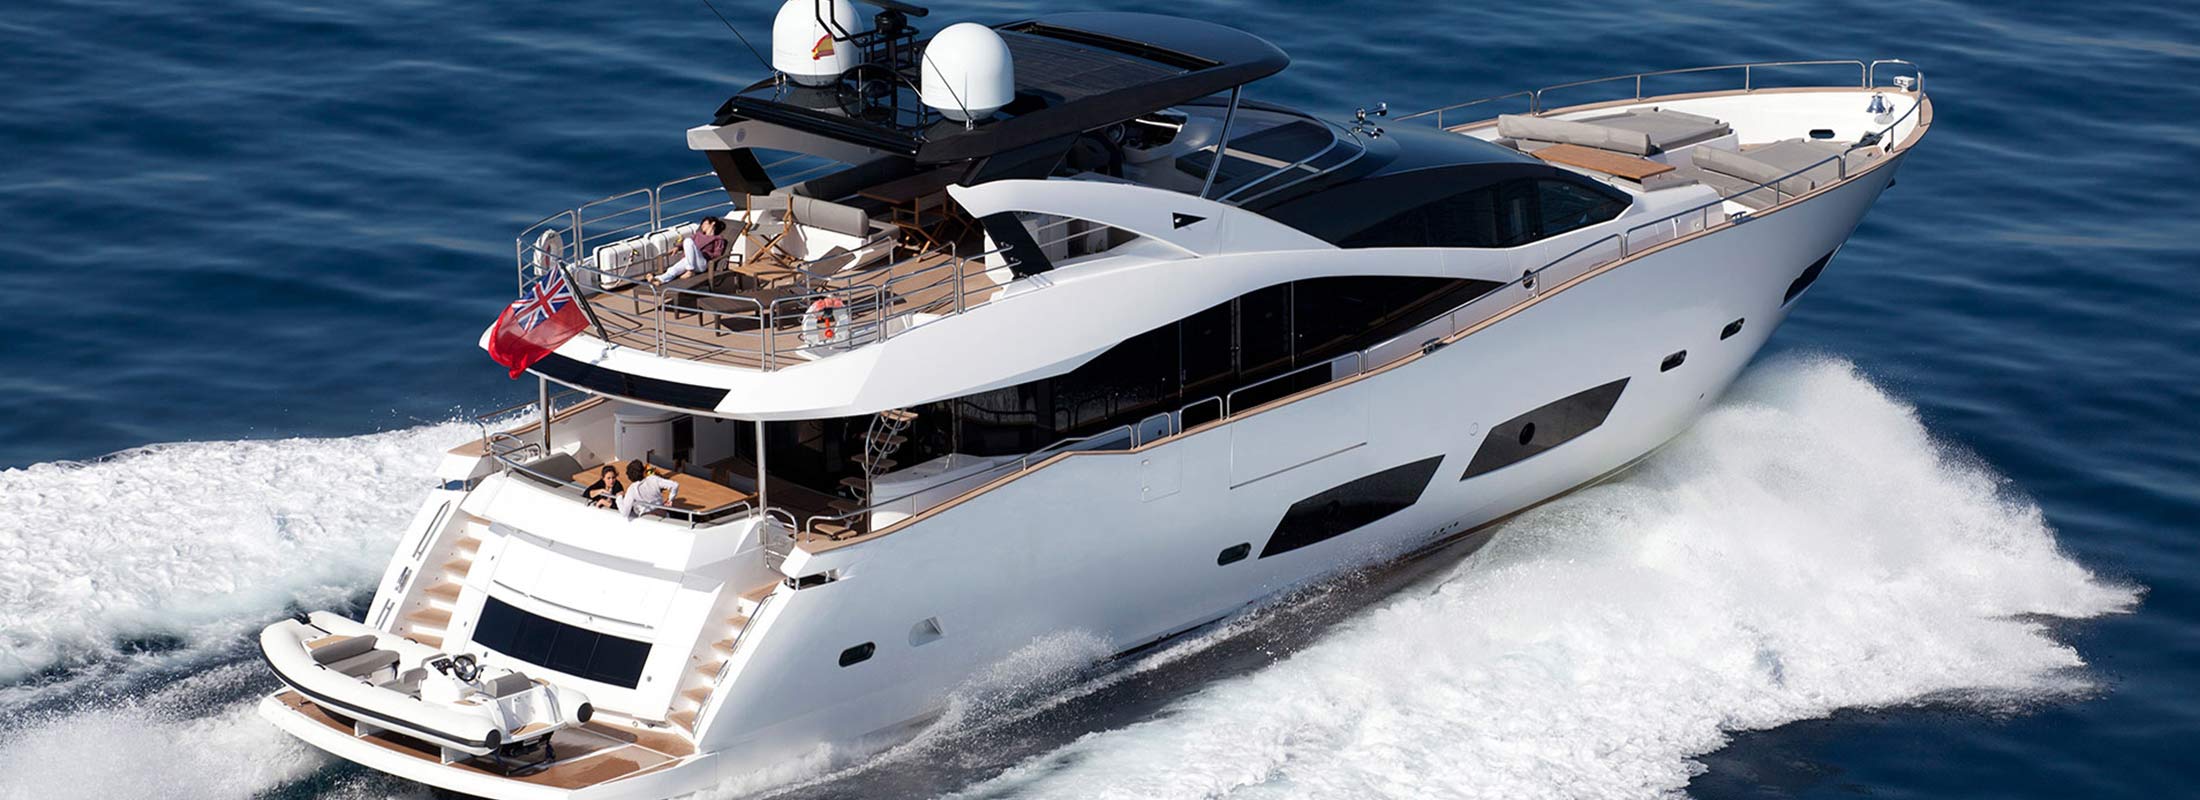 Aqua Libra Motor Yacht for Charter Mediterranean slider 3